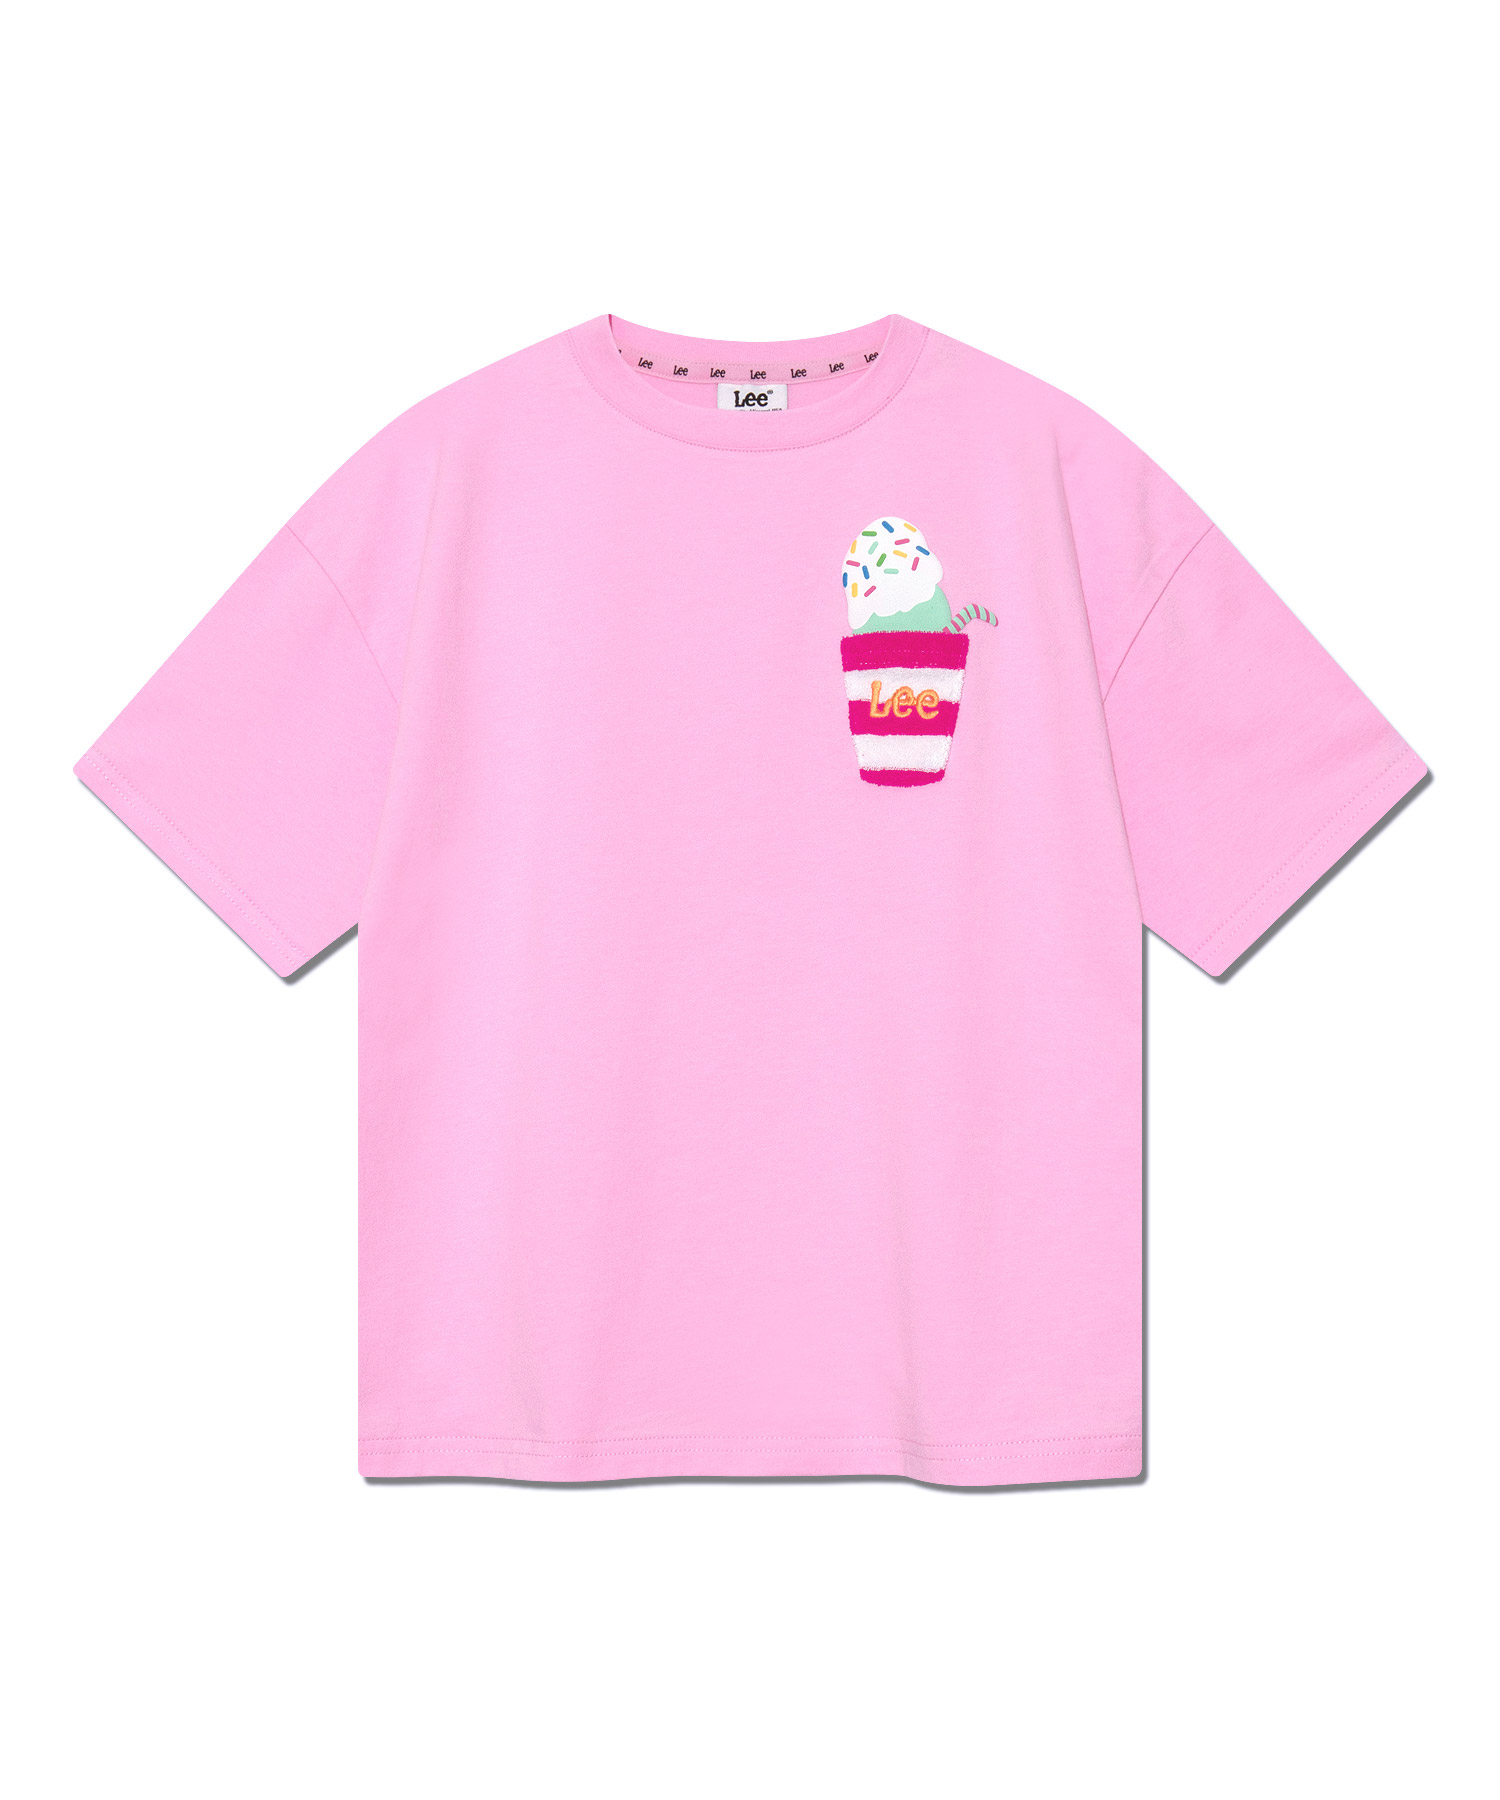 LEE 키즈 아이스크림 그래픽 반팔 티셔츠 핑크